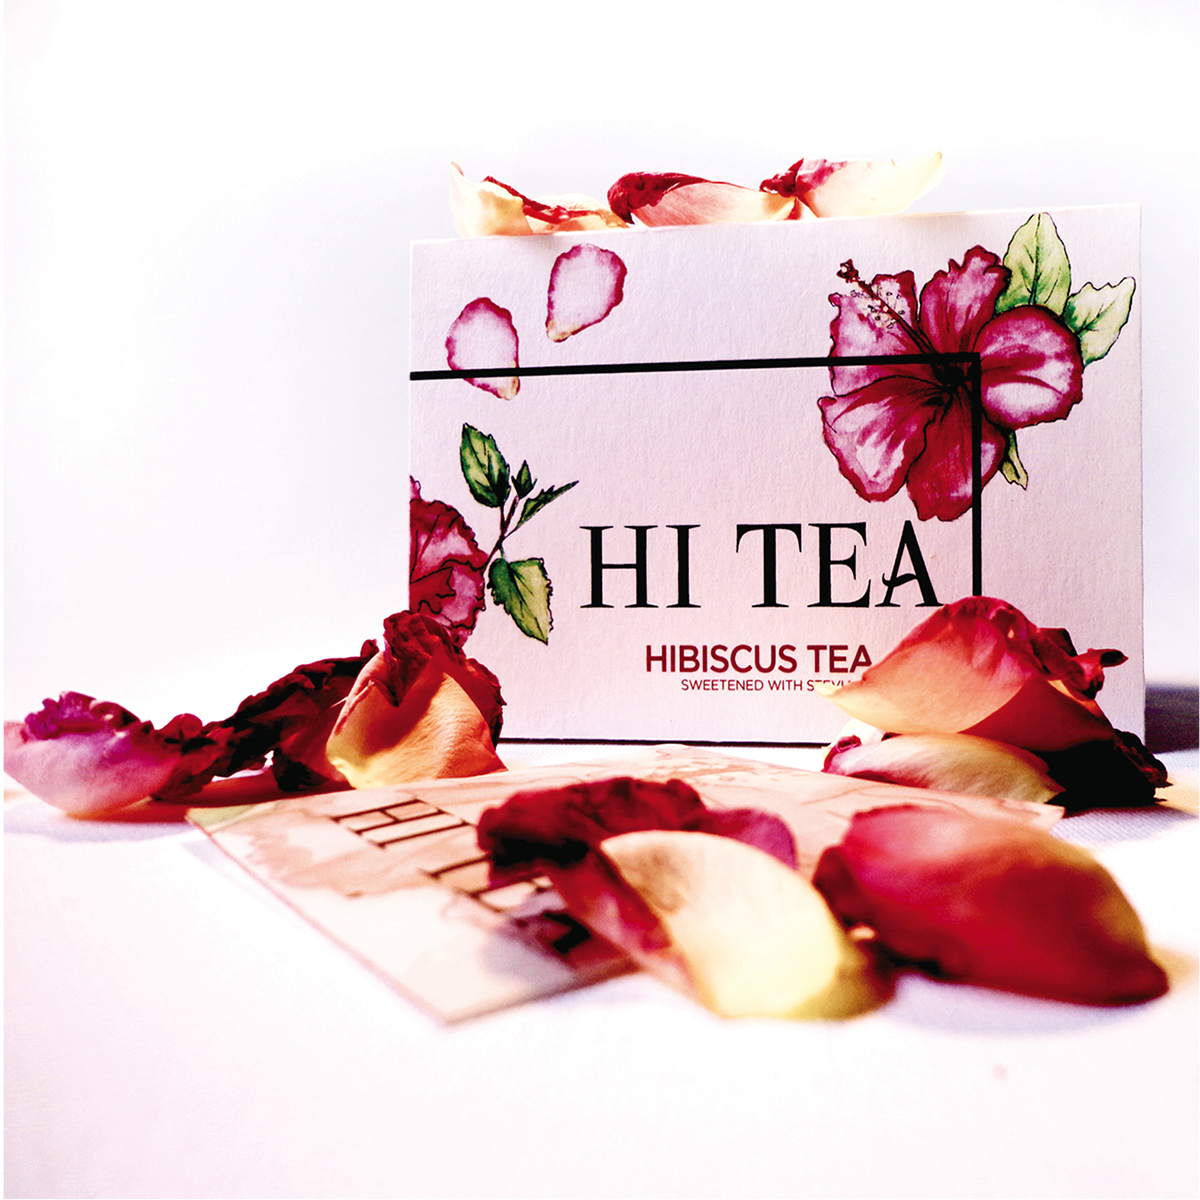 Hi Tea Hibiscus Tea Tea Packaging hibiscus Pink and Red design packaging design teabags petals Flowers